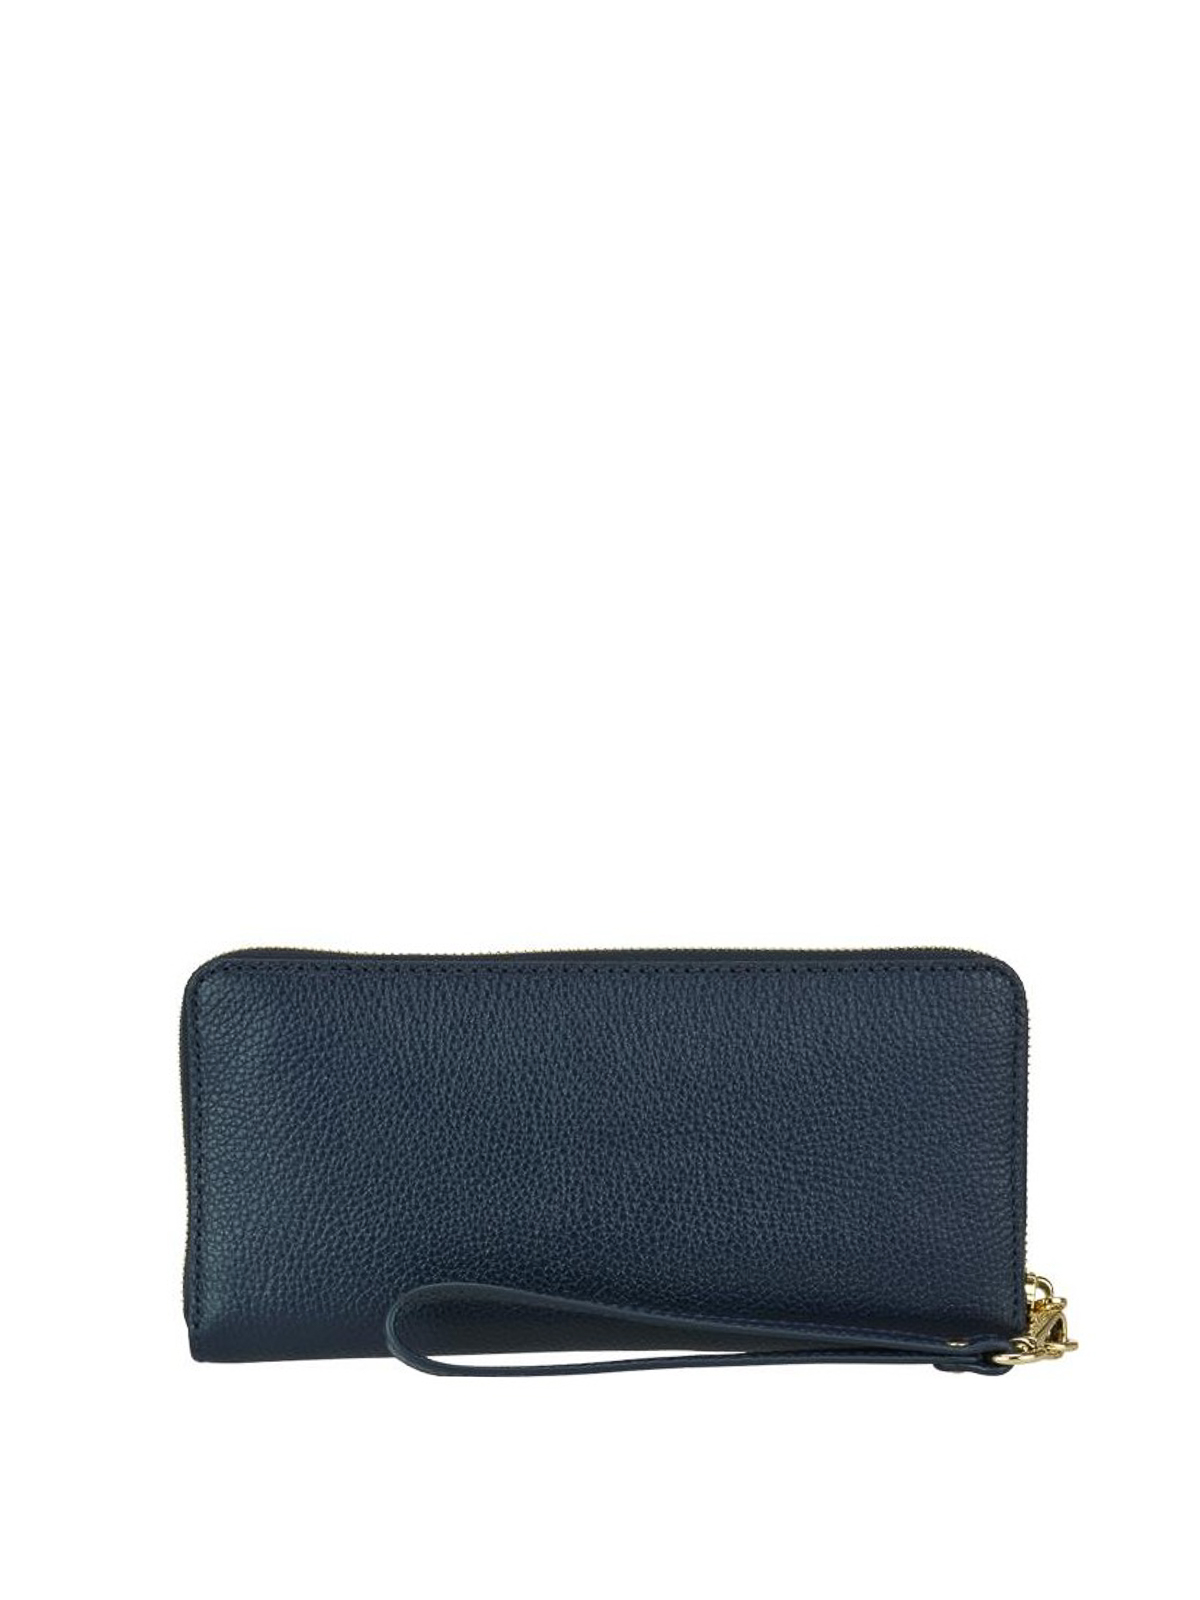 Michael Kors wallet. Blue